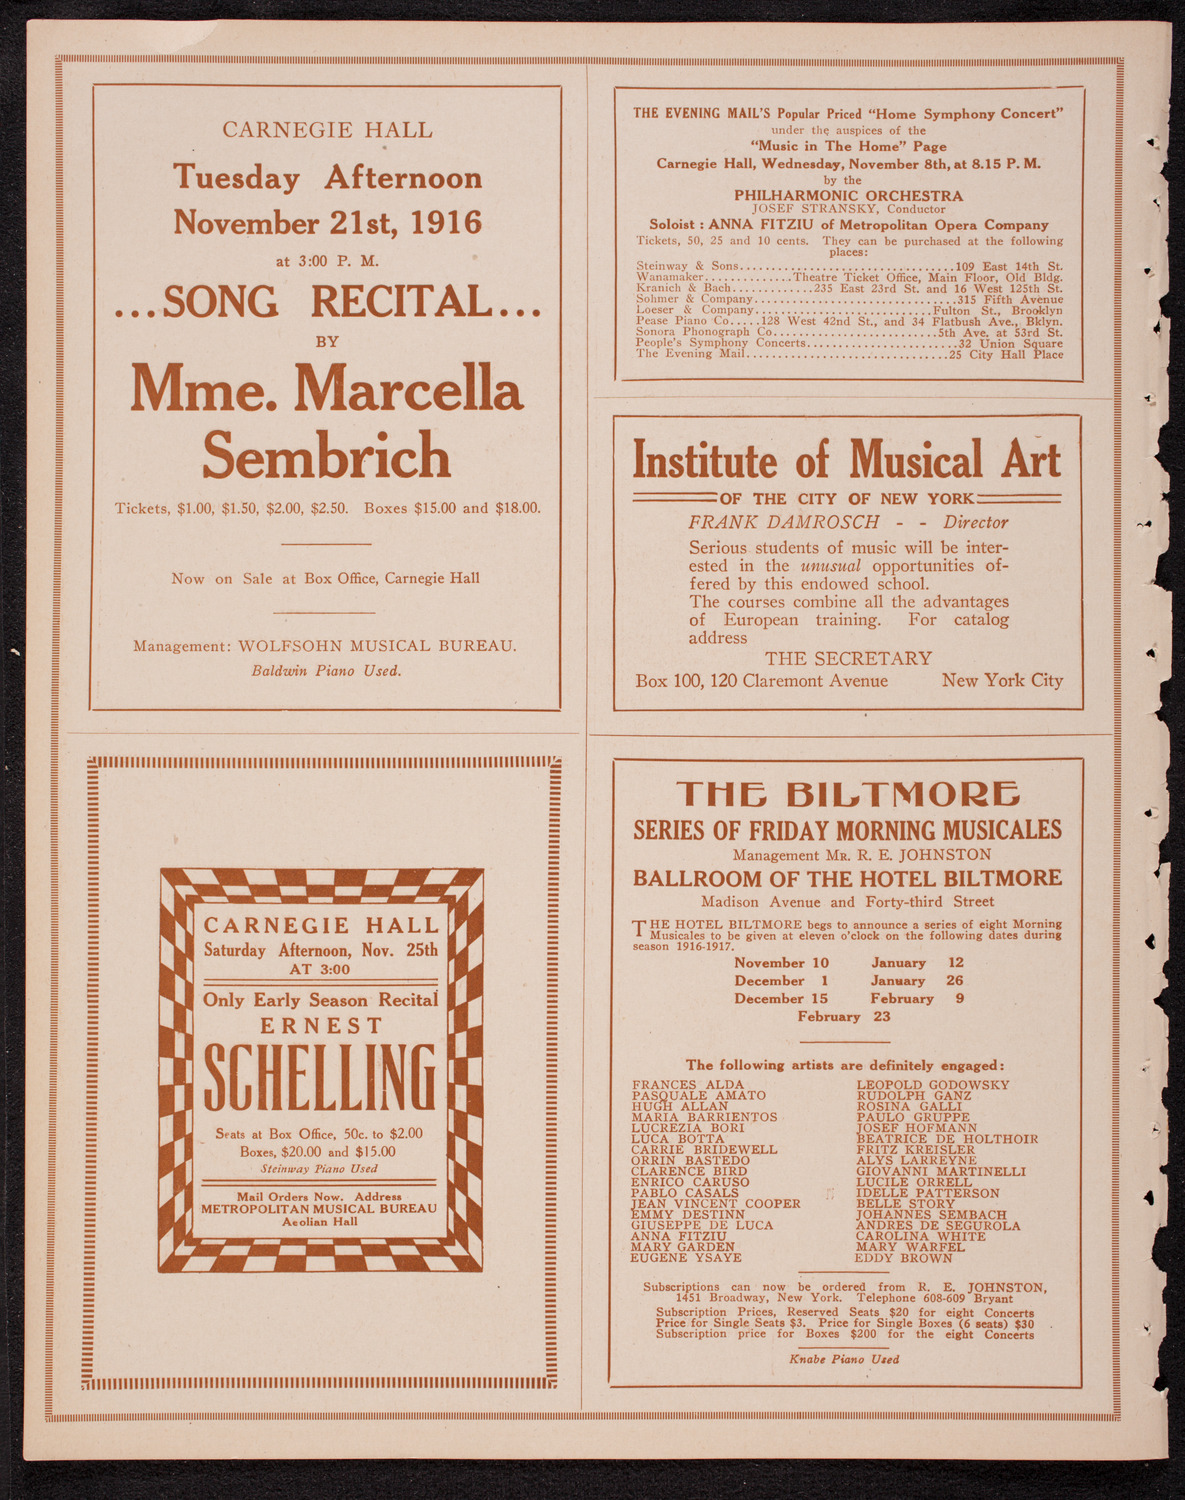 Elmendorf Lecture: Mexico, November 6, 1916, program page 2